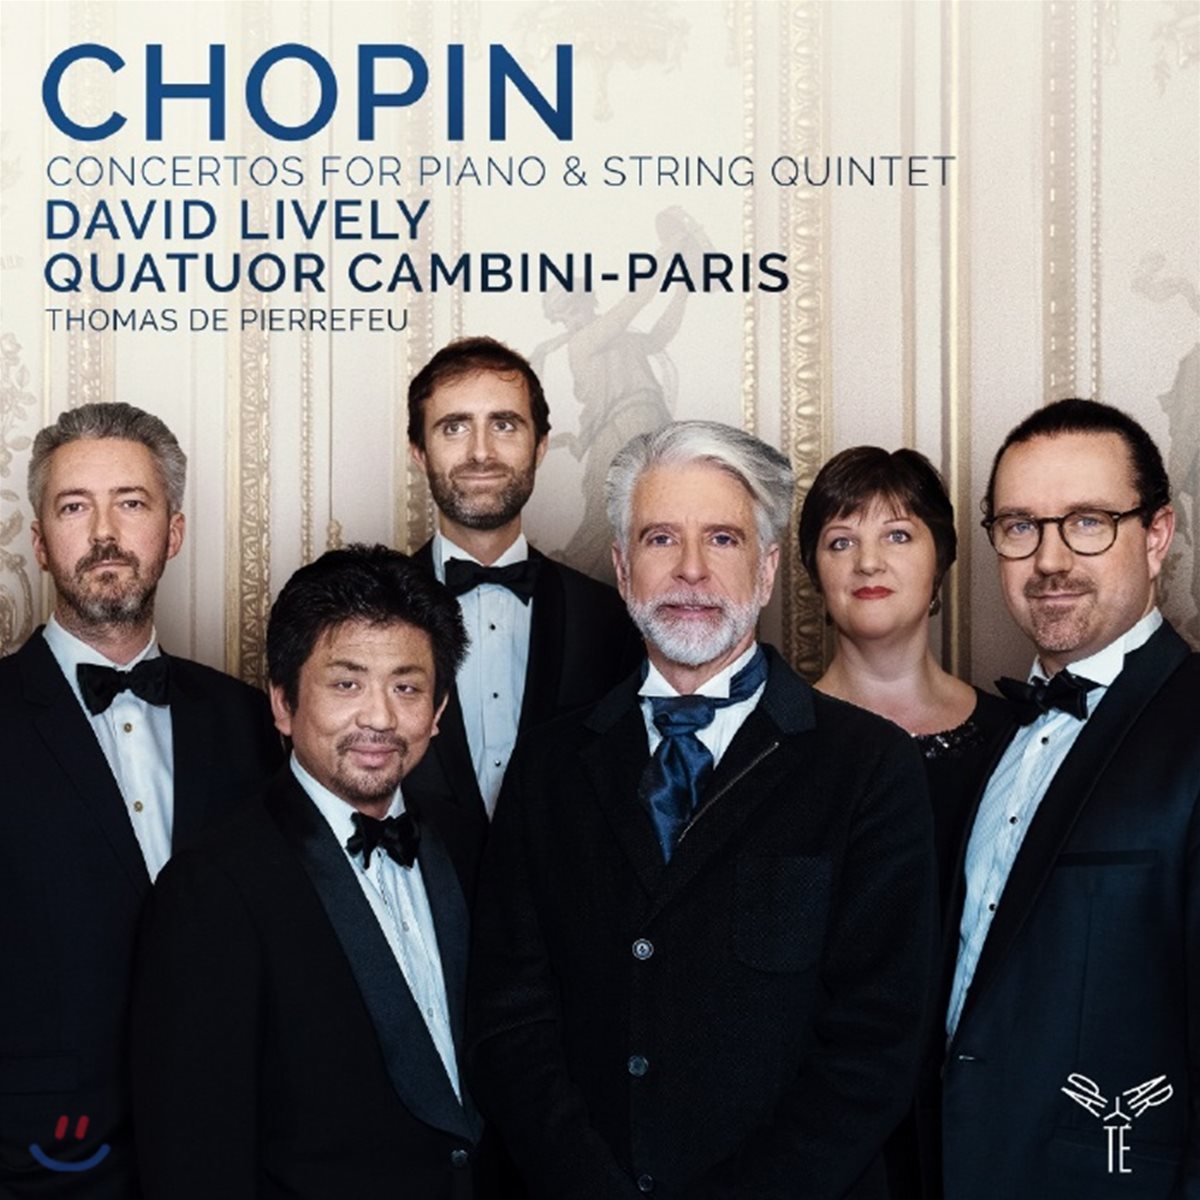 David Lively 쇼팽: 피아노와 현악 오중주를 위한 협주곡 1, 2번 (Chopin: Concertos for Piano, String Quintet Op. 21, 11)